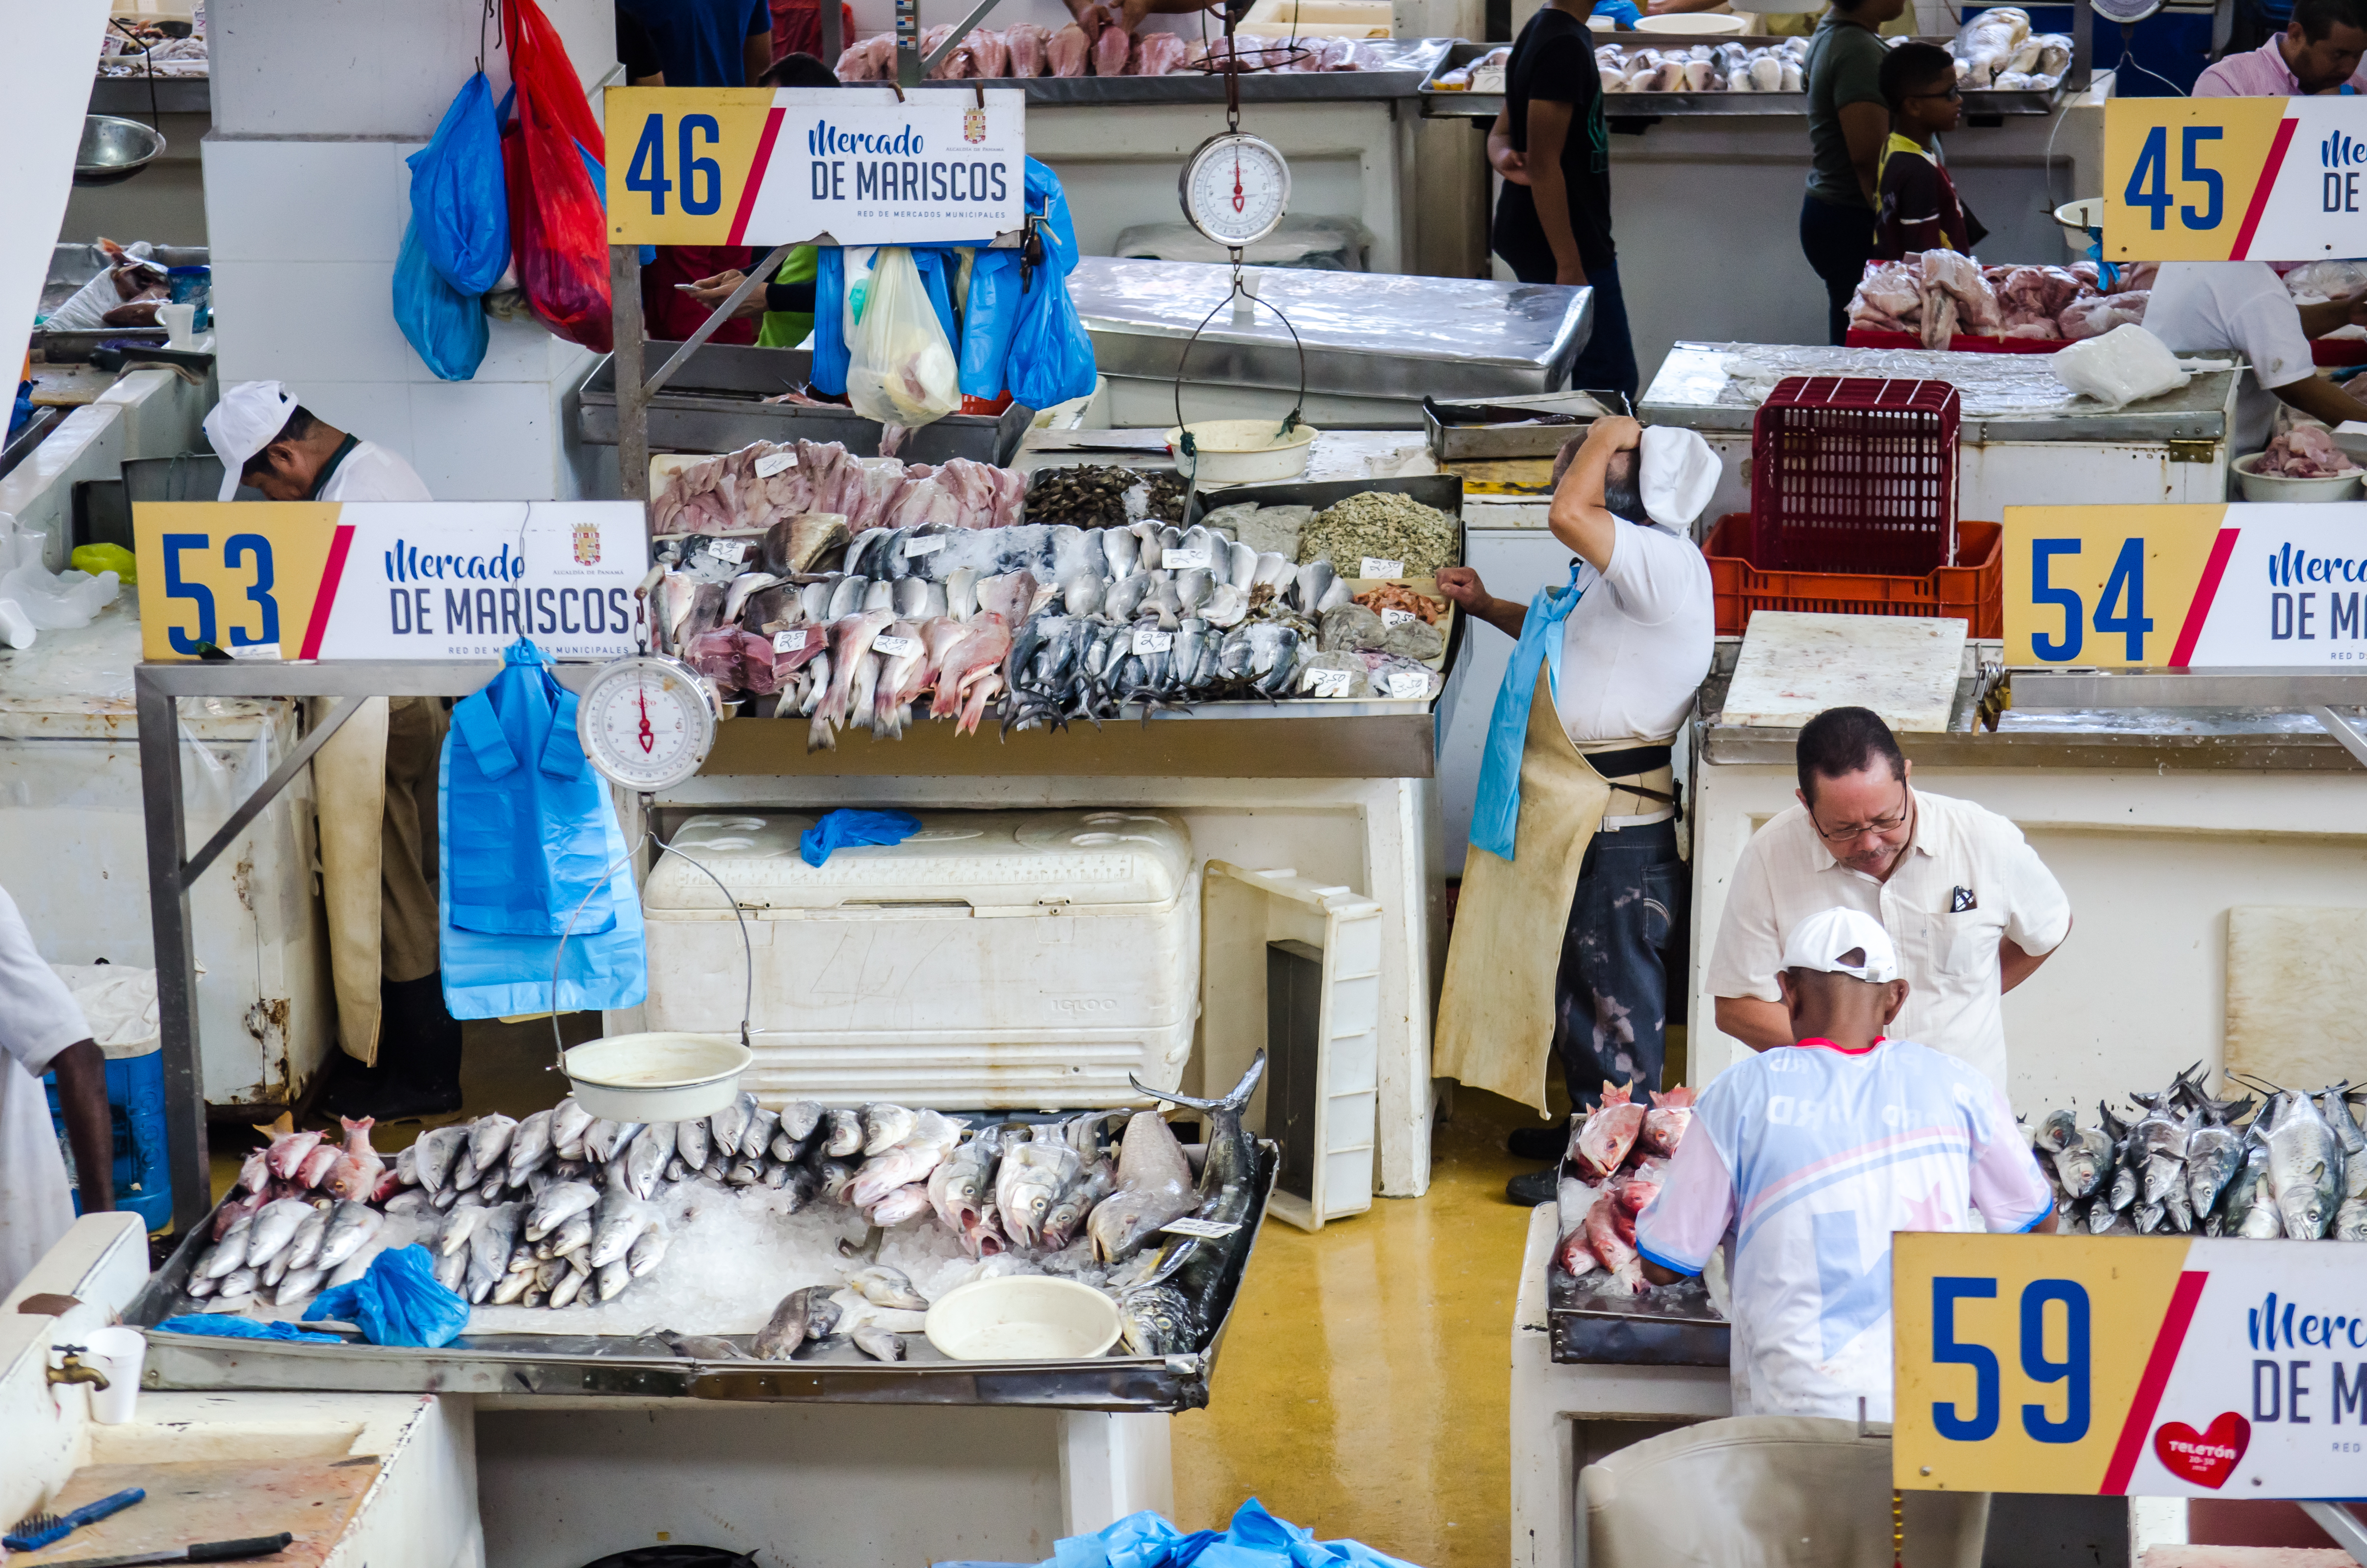 The famous Mercado des Mariscos / fish market in Panama City.